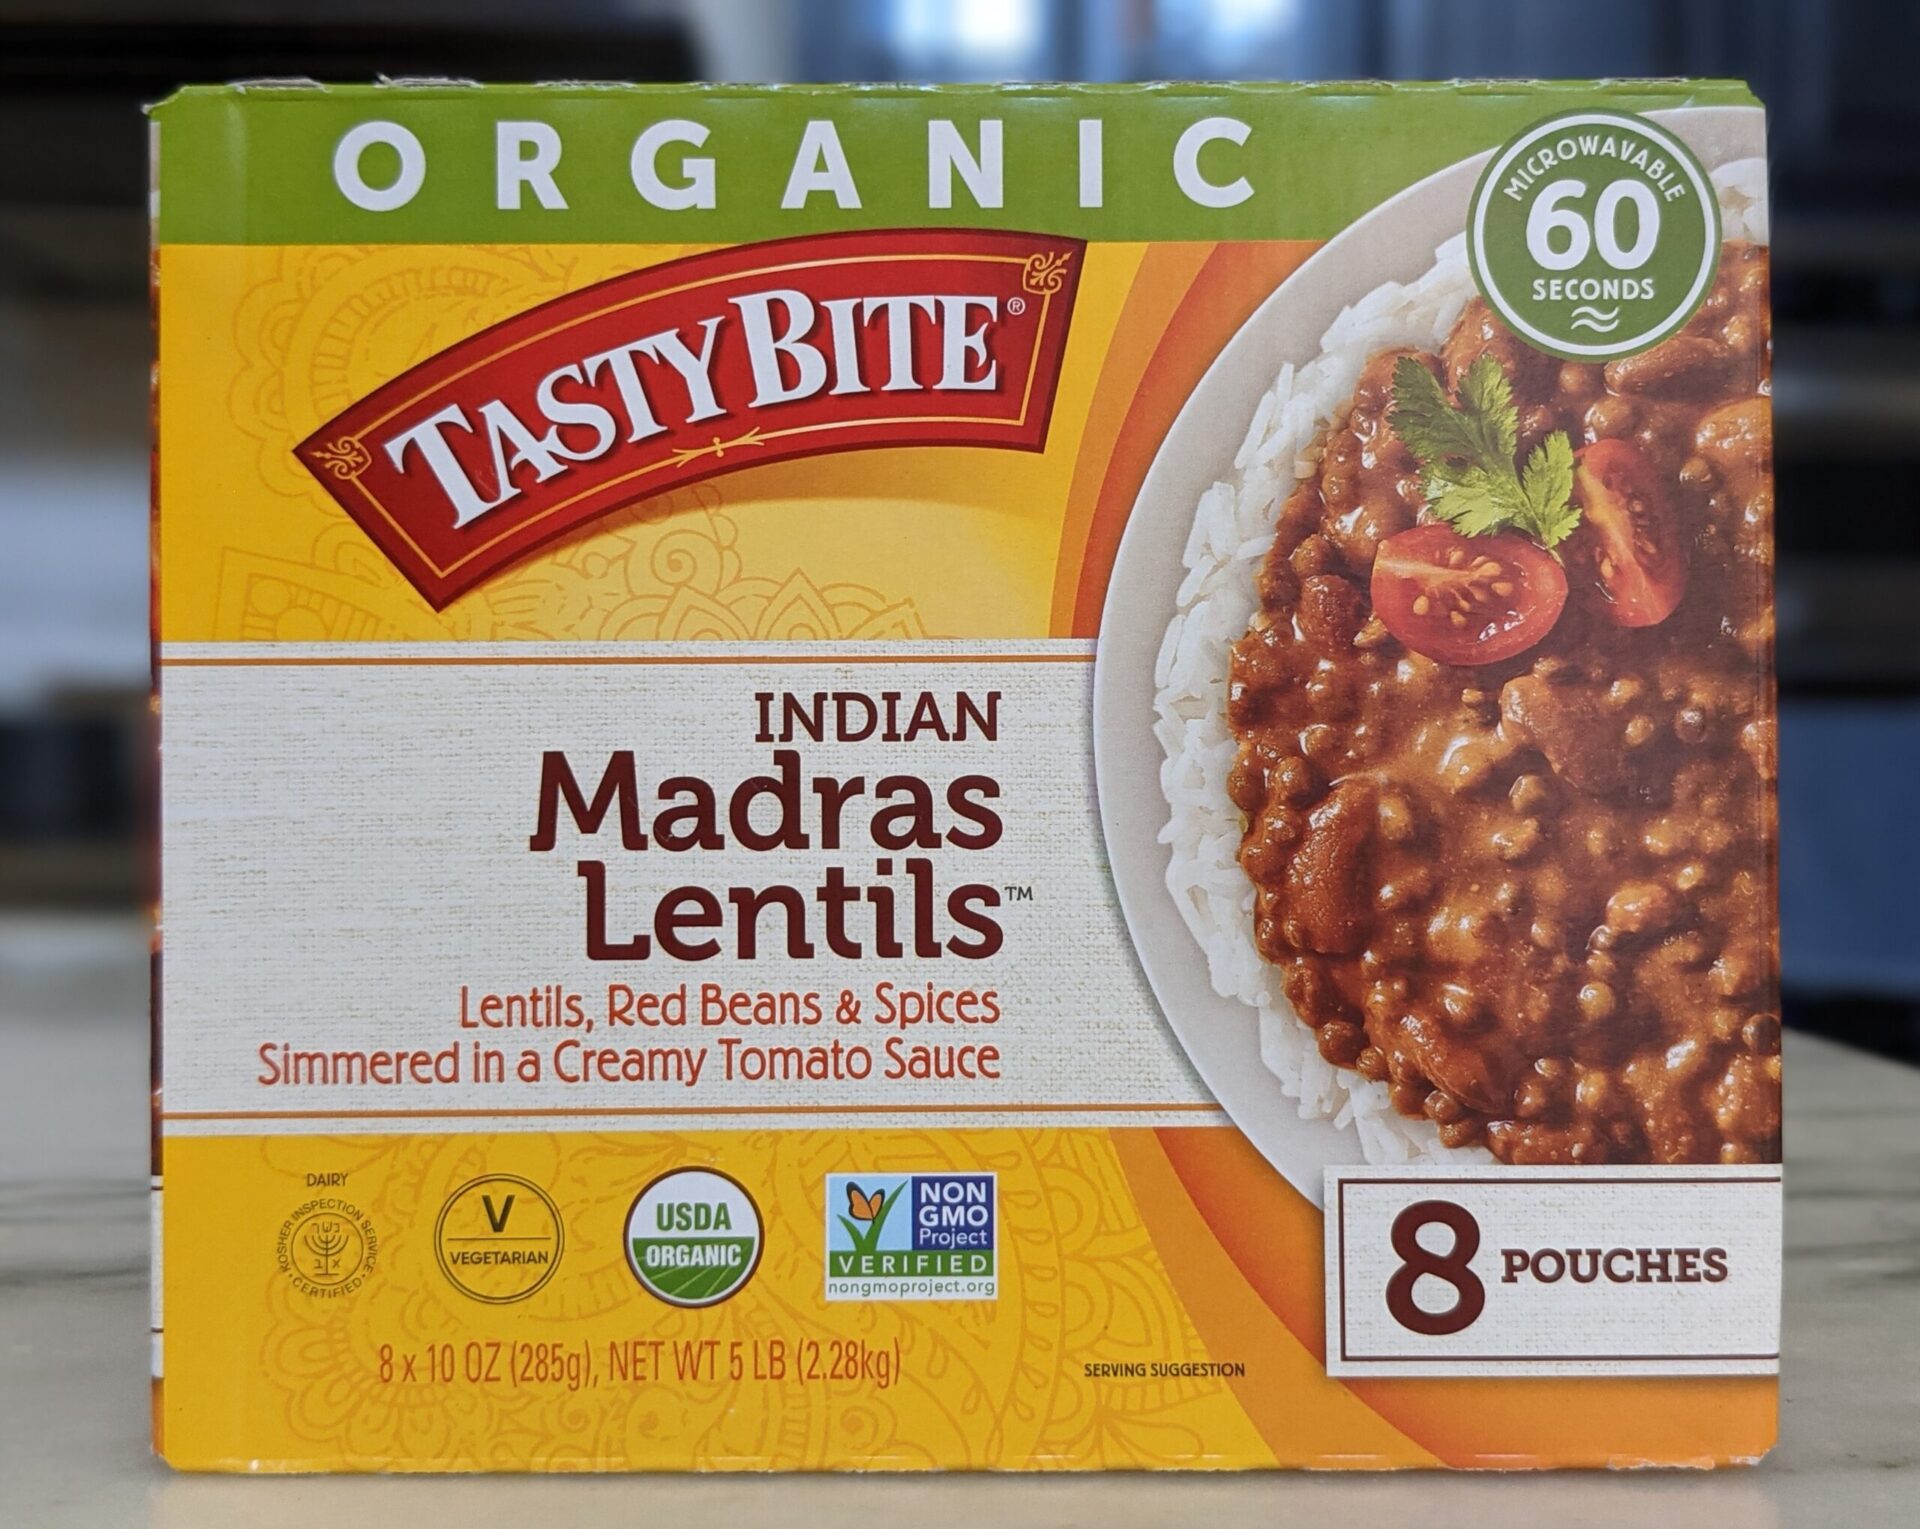 Costco-Tasty-Bites-Madras-Lentils